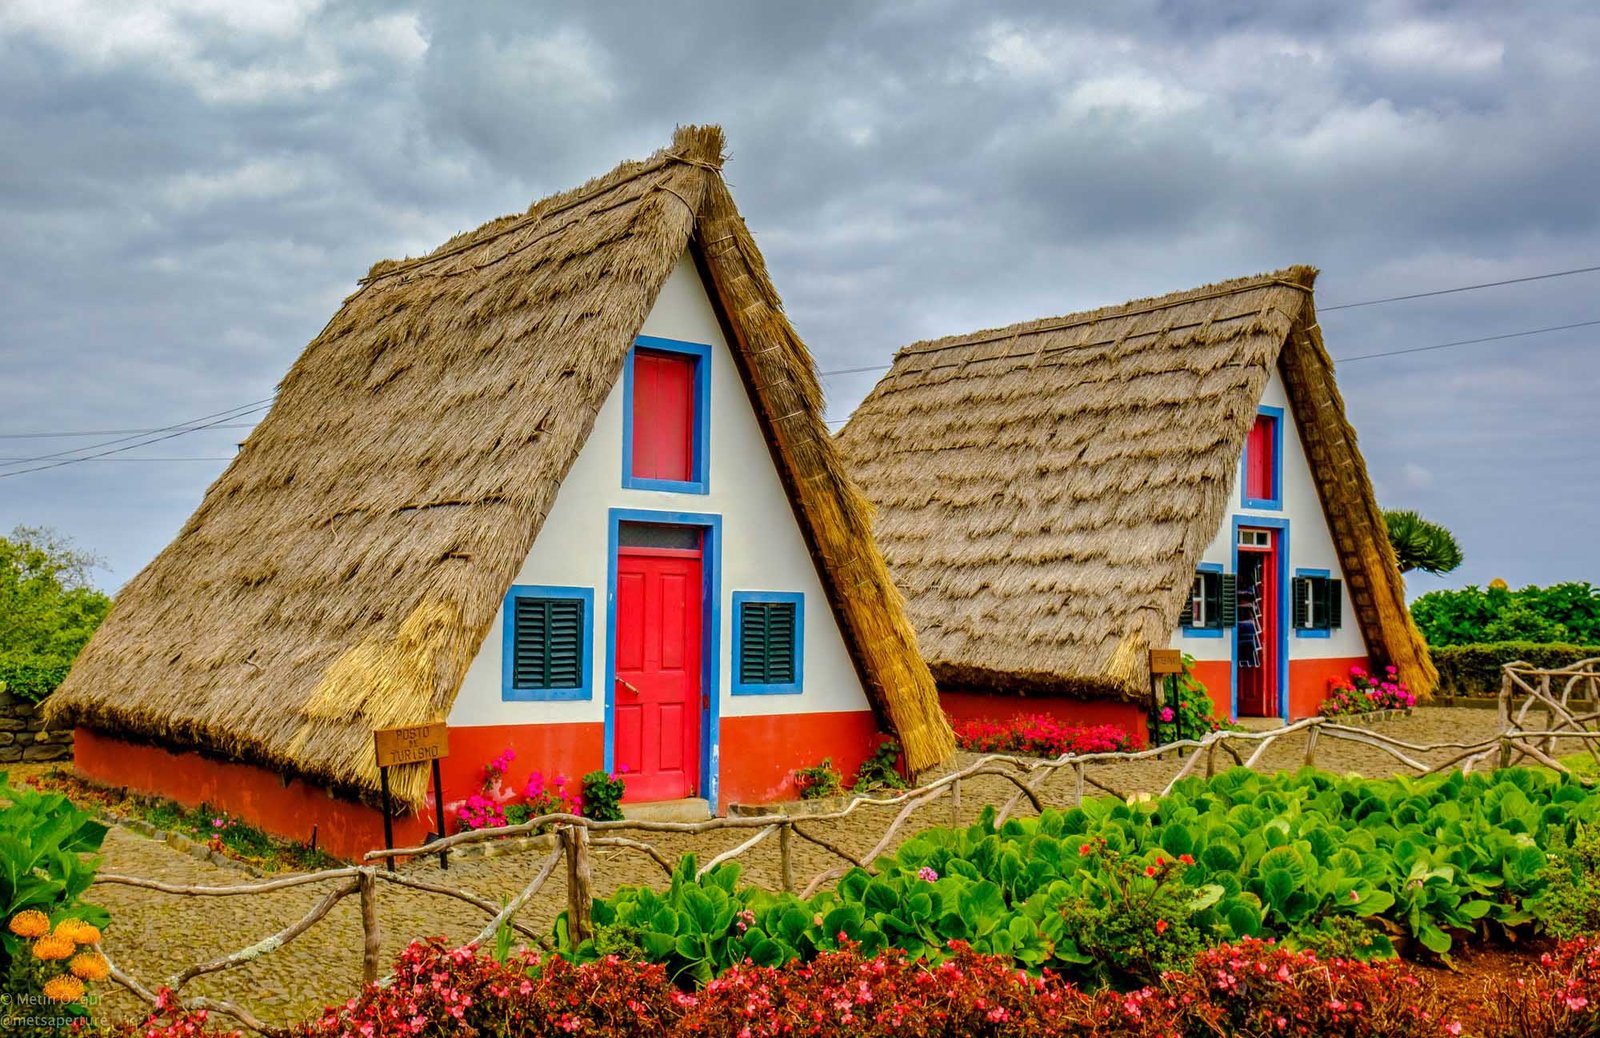 santana houses